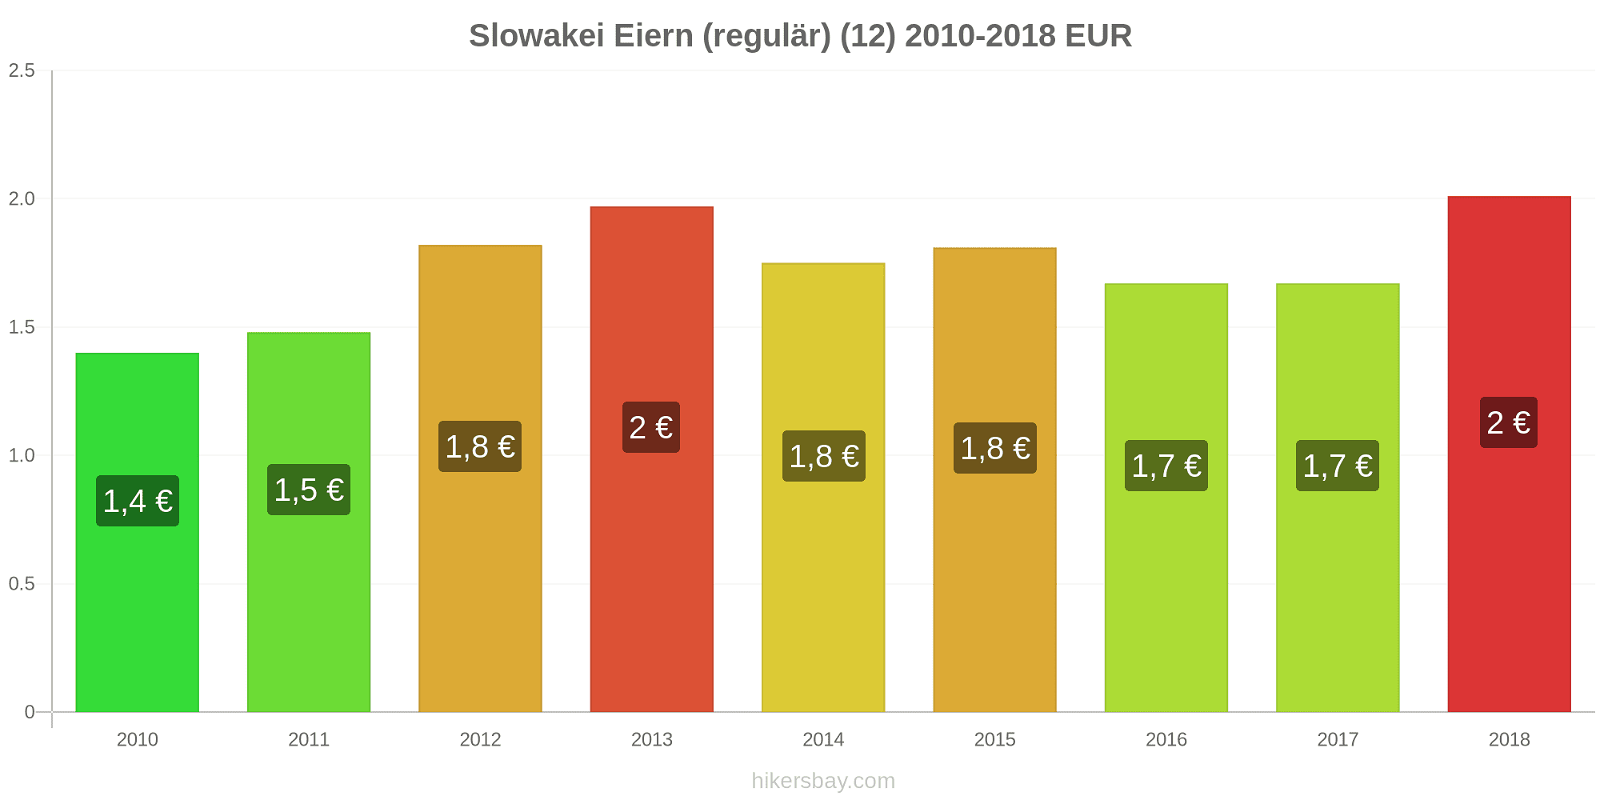 Slowakei Preisänderungen Eier (regelmäßig) (12) hikersbay.com